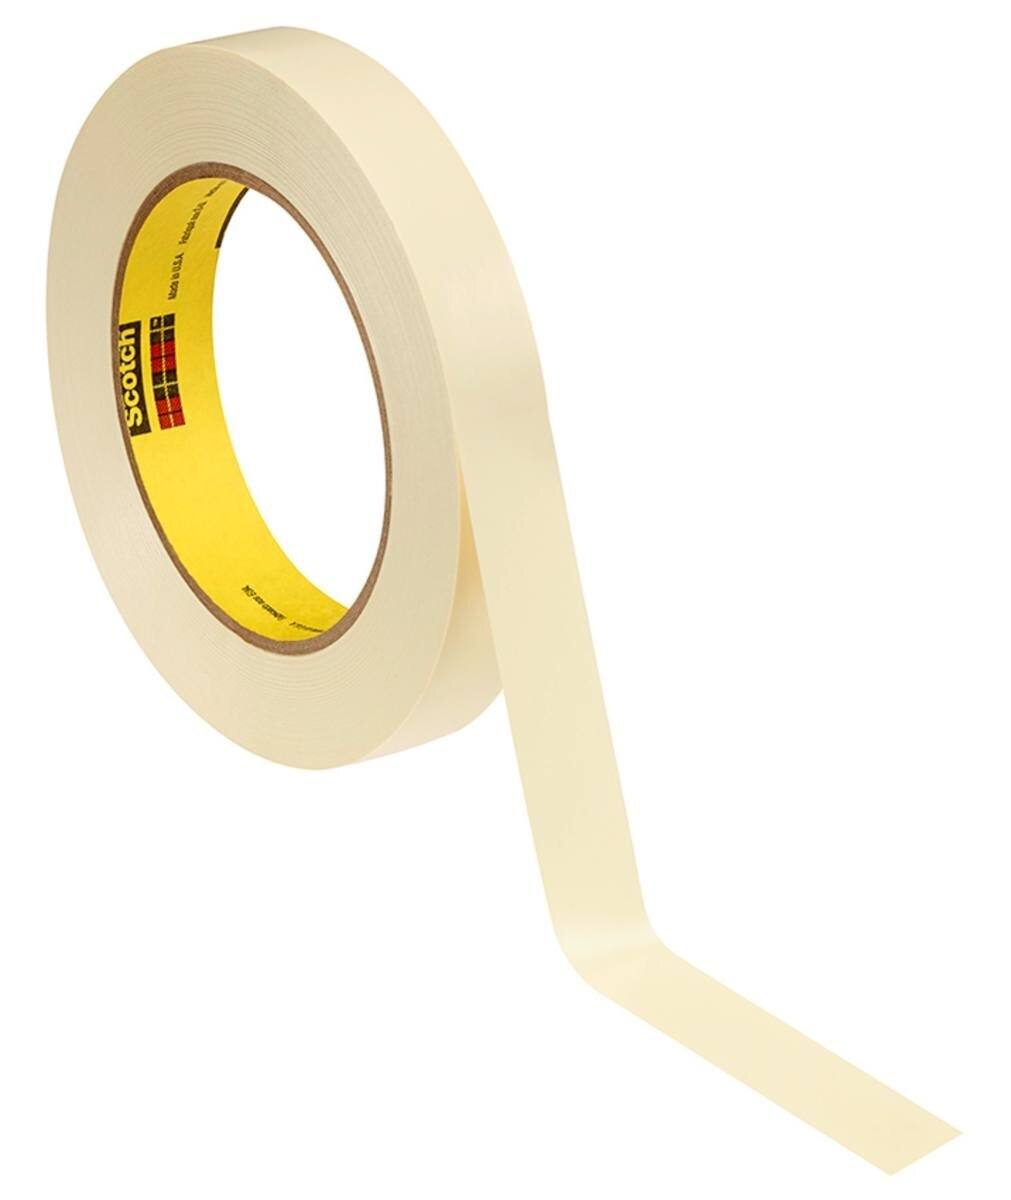 3M Electroplating tape soft PVC 470, yellow, 6 mm x 33 m, 0.18 mm